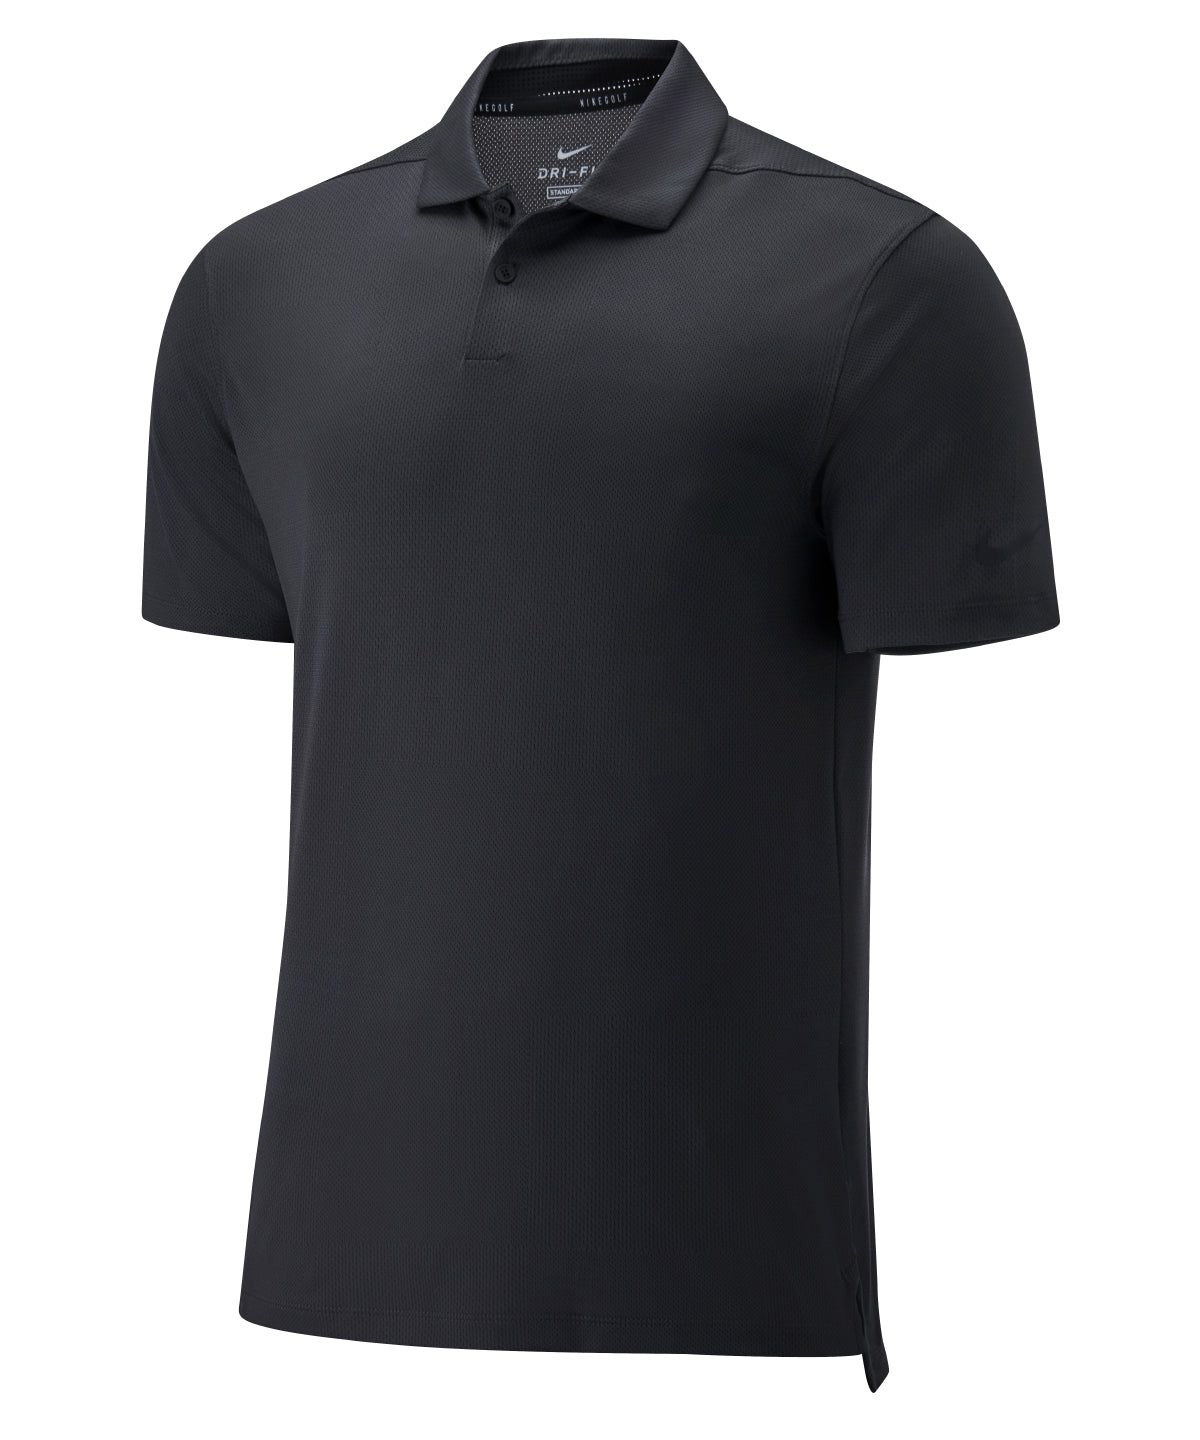 Personalised Polo Shirts - Black Nike Nike Dry Vapor jaquard polo